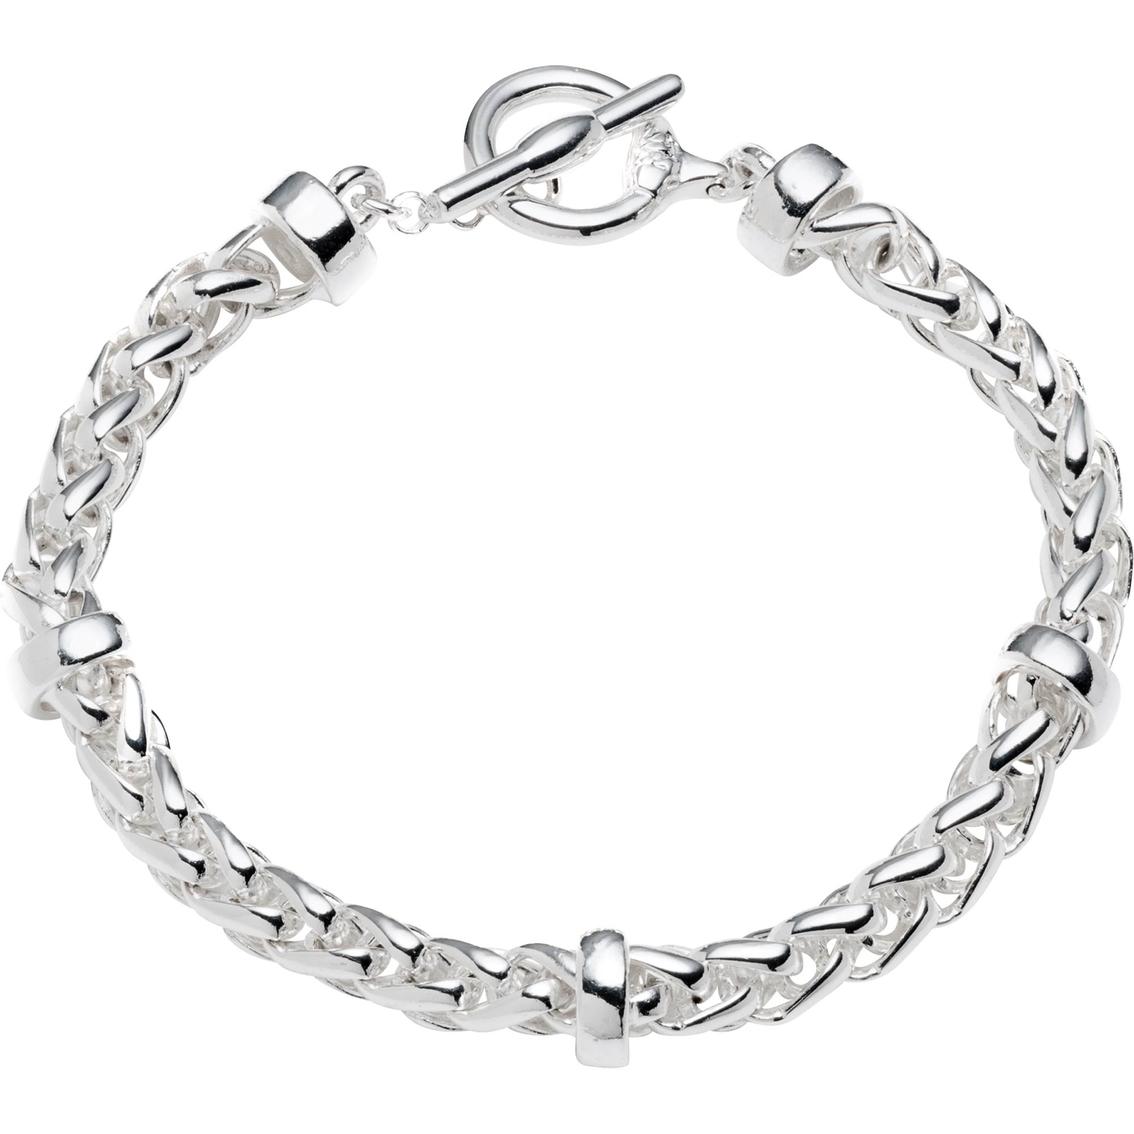 Lauren Ralph Lauren Braid Chain Bracelet | Fashion Bracelets | Jewelry ...